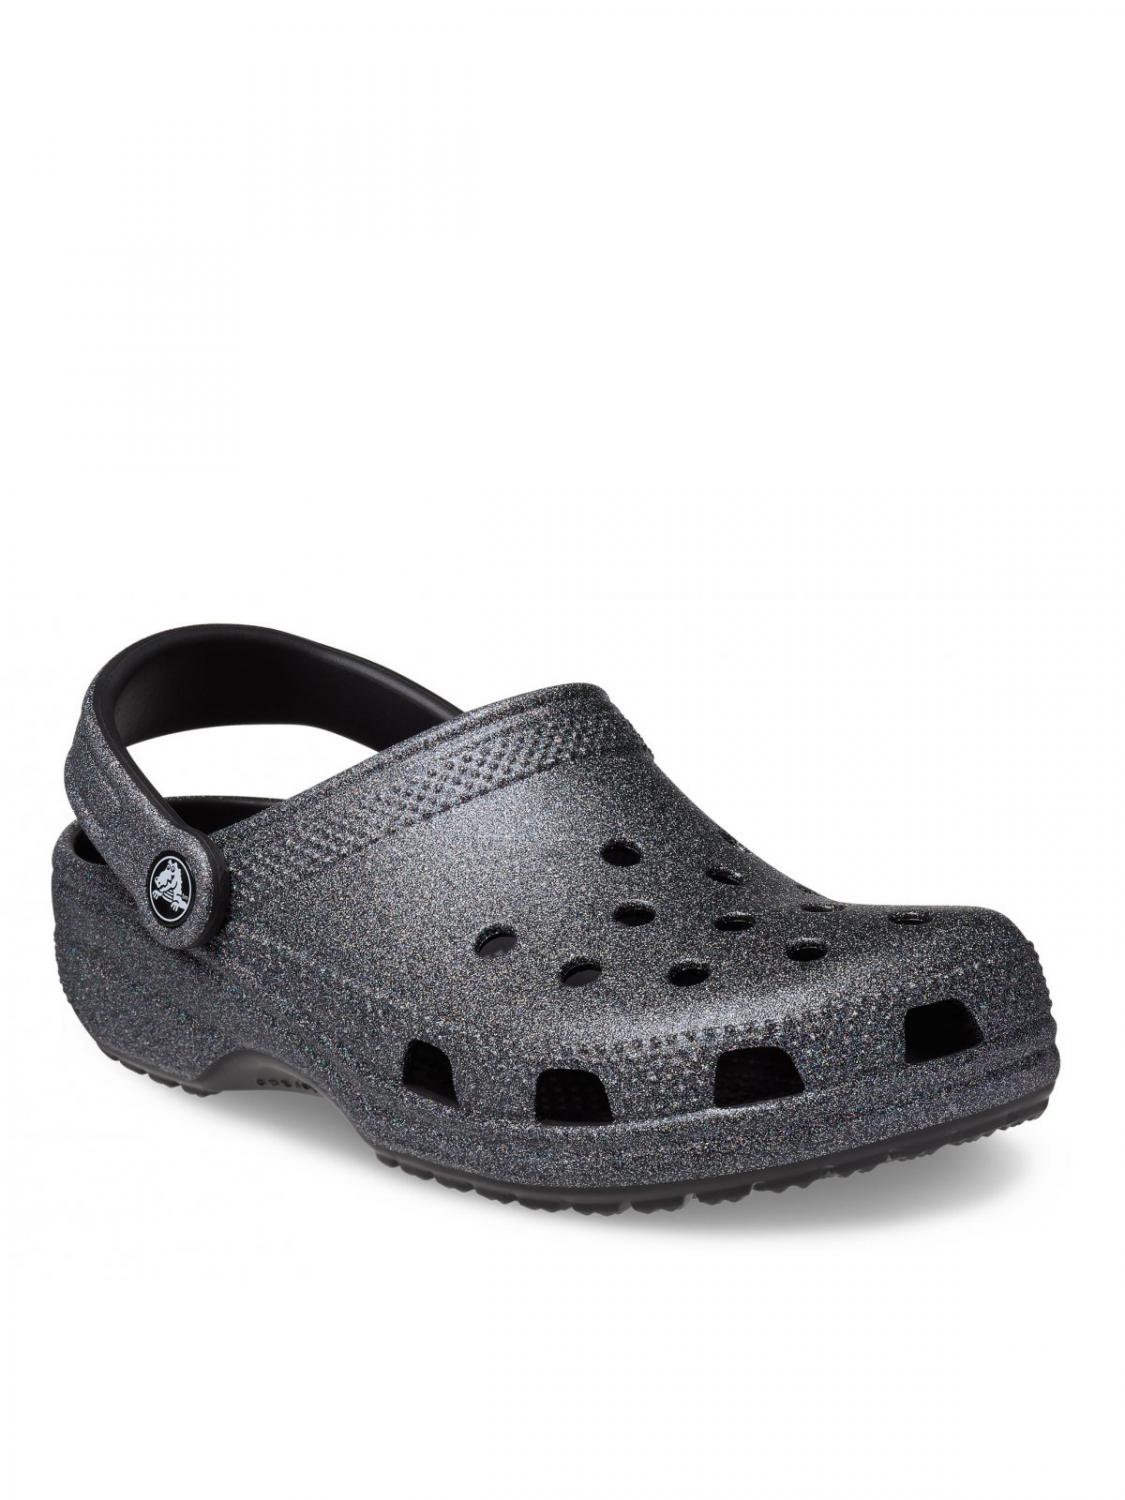 Crocs Classic Glitter Ii Clog W Sabot Sandal Black - Buy At Outlet Prices!